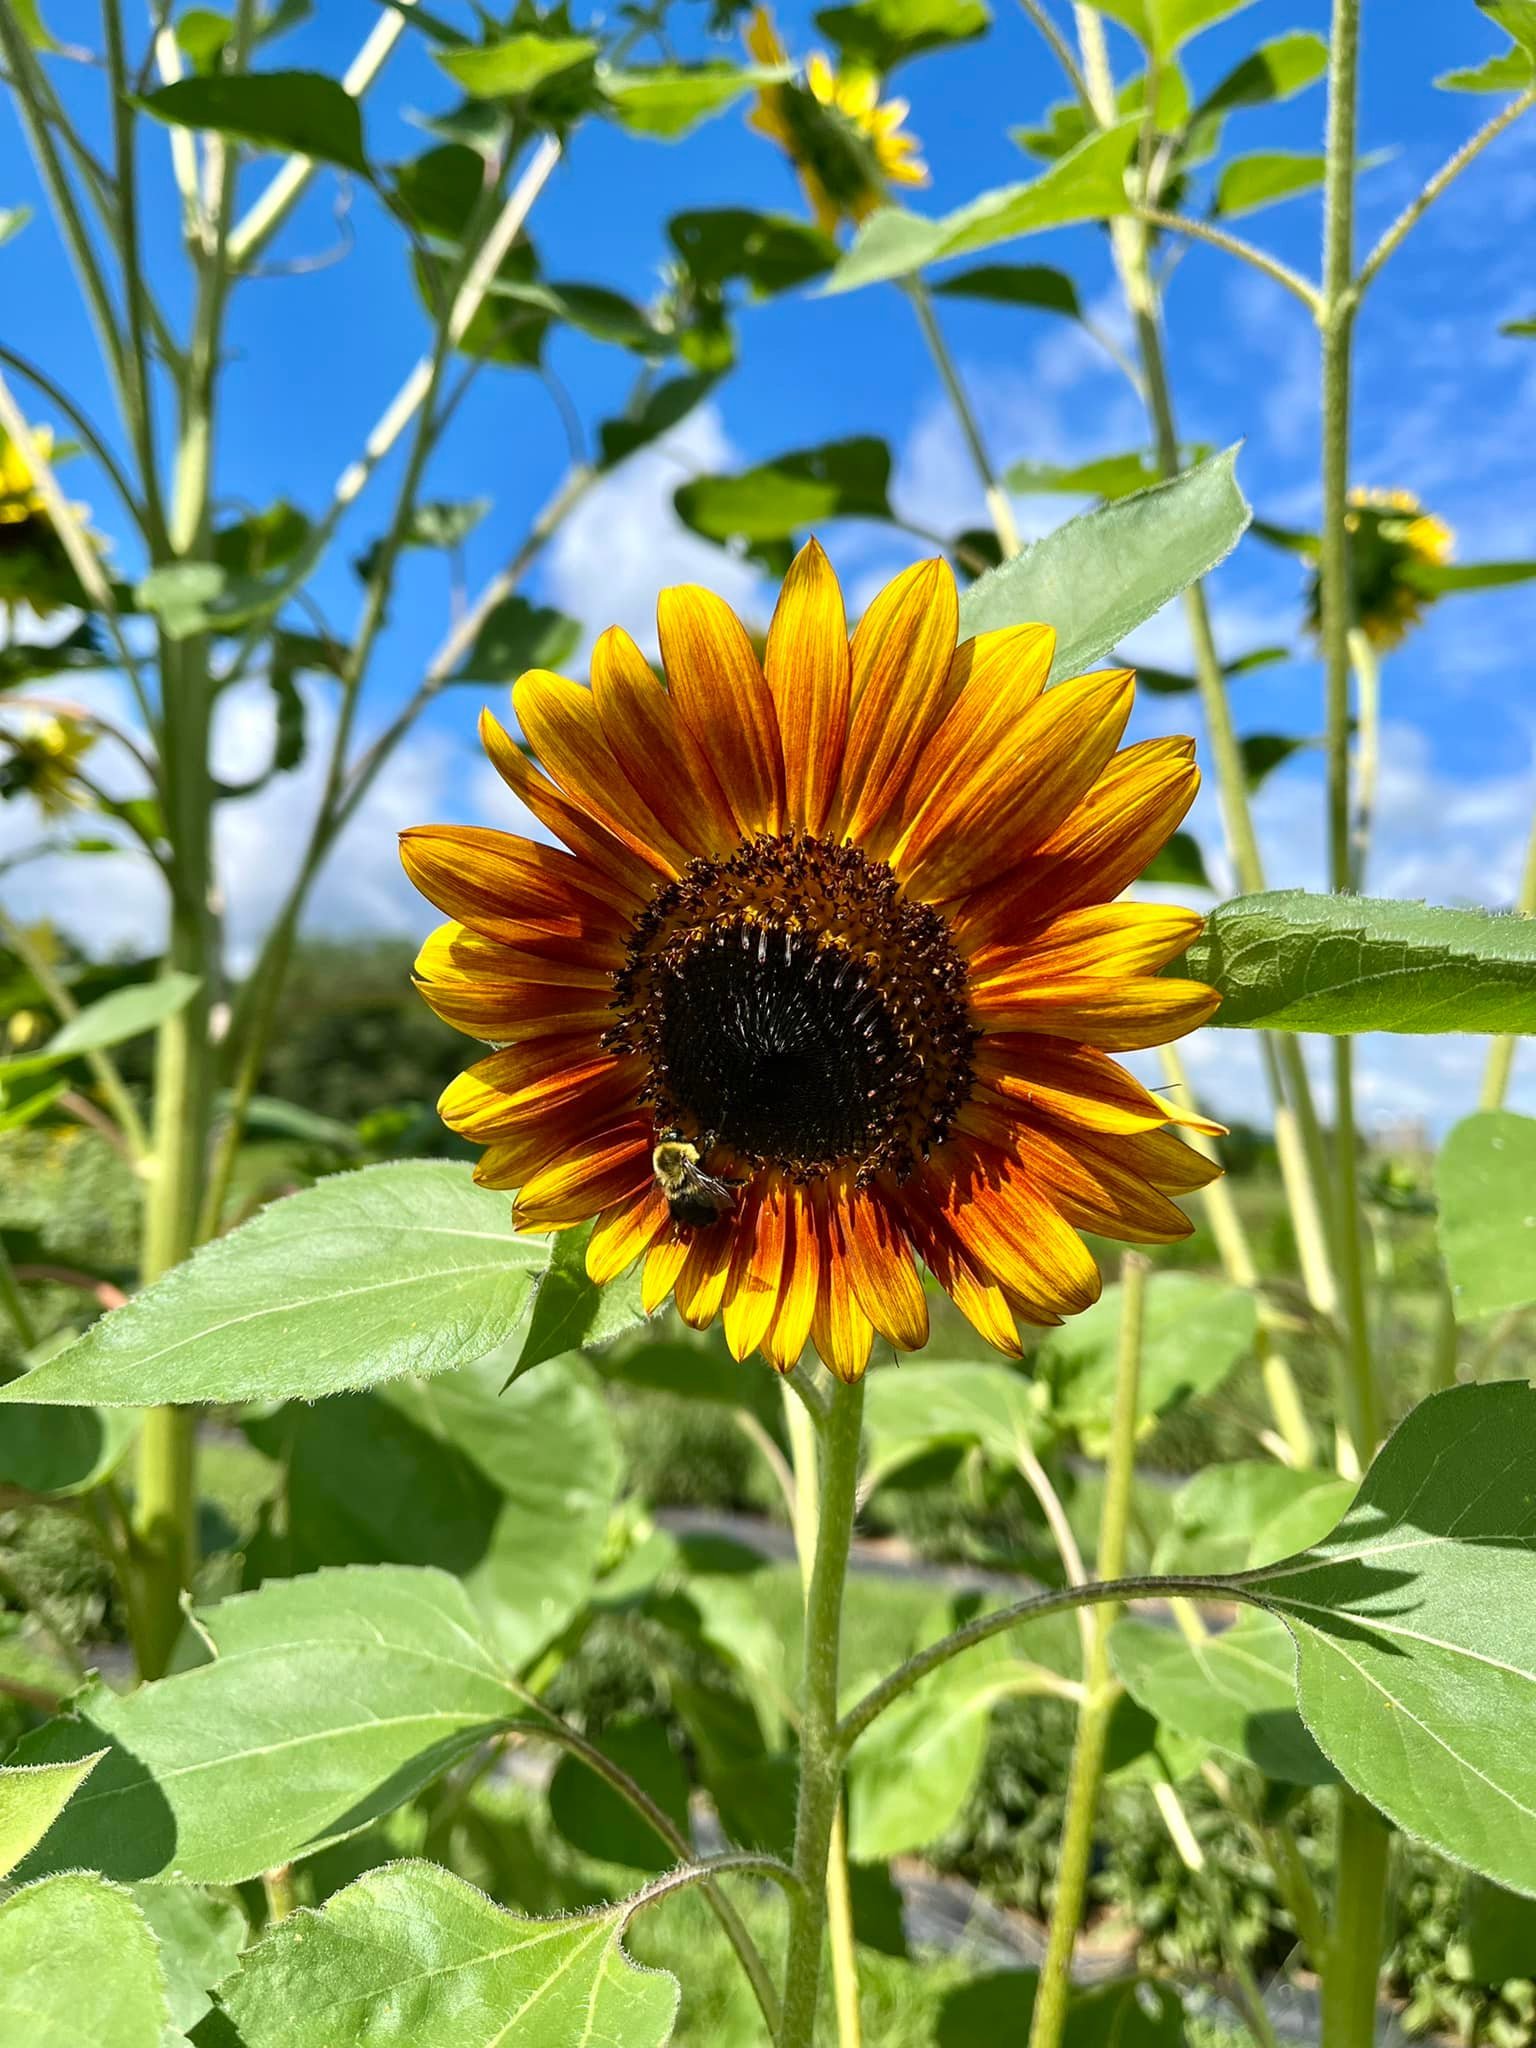 Chasing the Sun, Sunflowers in Multi, Fabric Half-Yards - Picking Daisies